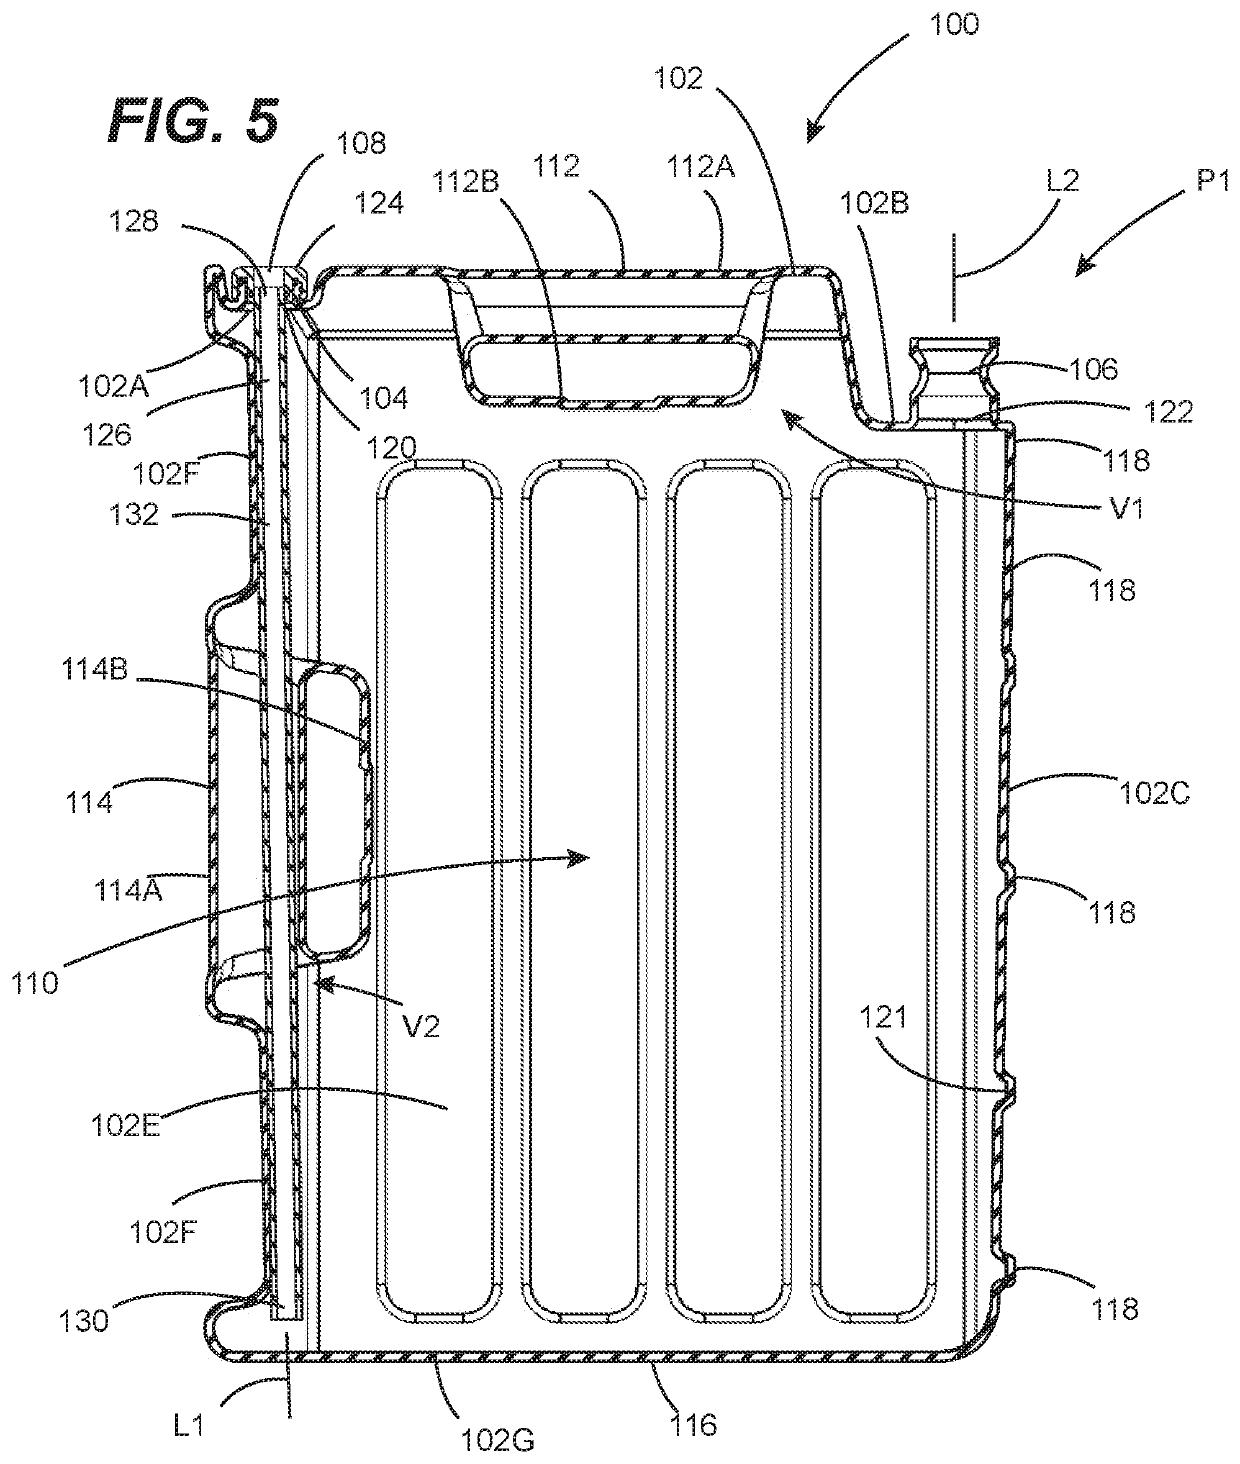 Liquid containers having a vent structure promoting improved liquid dispensing